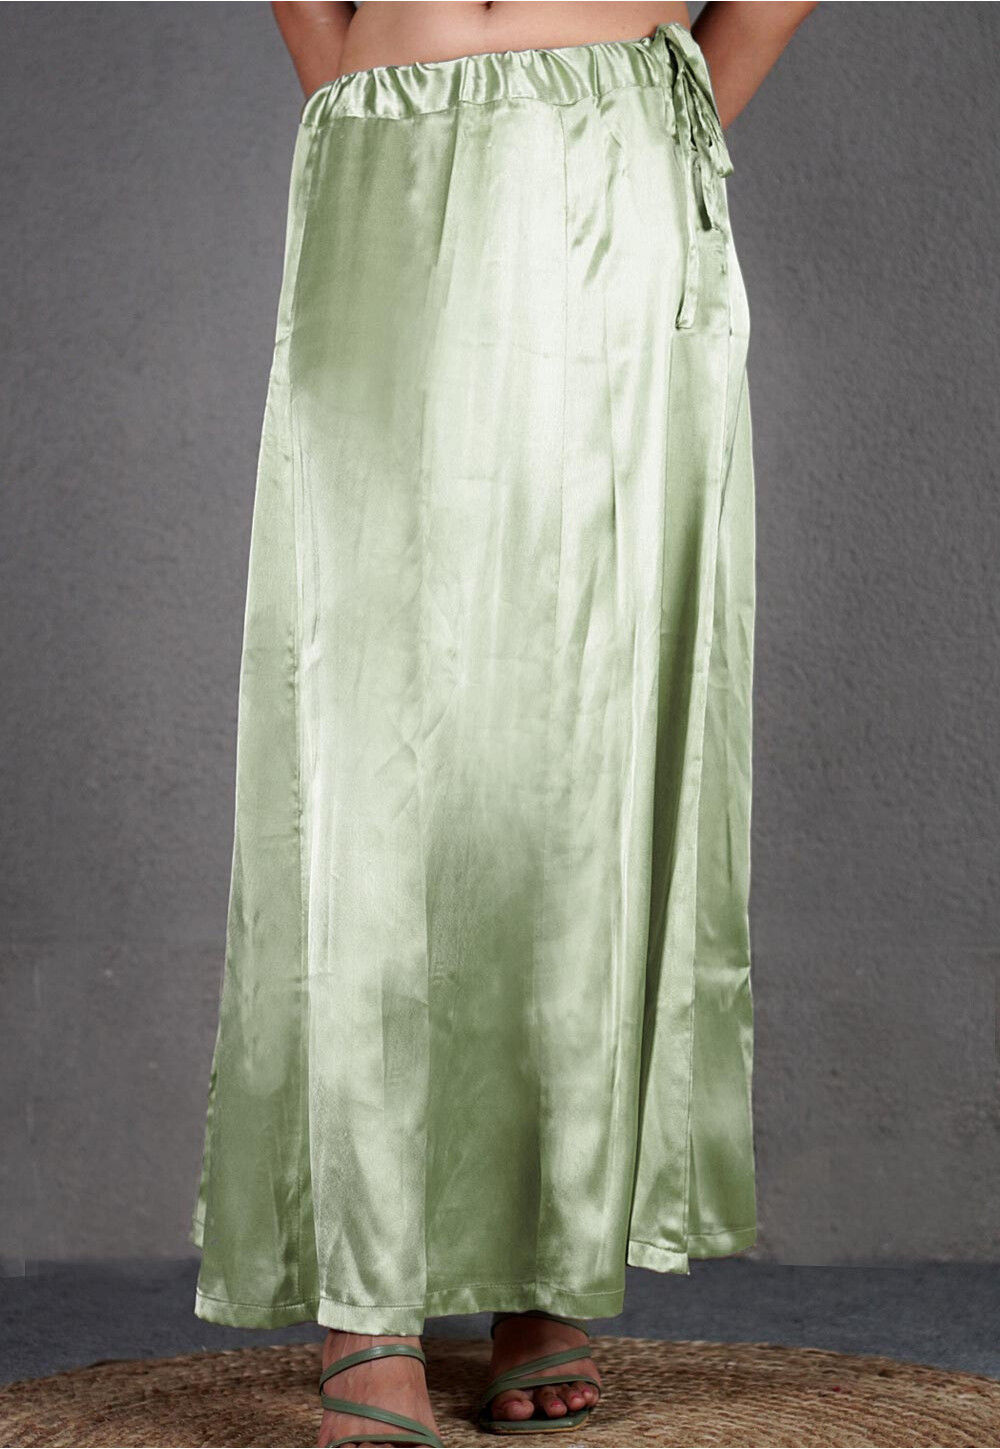 Solid Color Satin Petticoat in Pastel Green